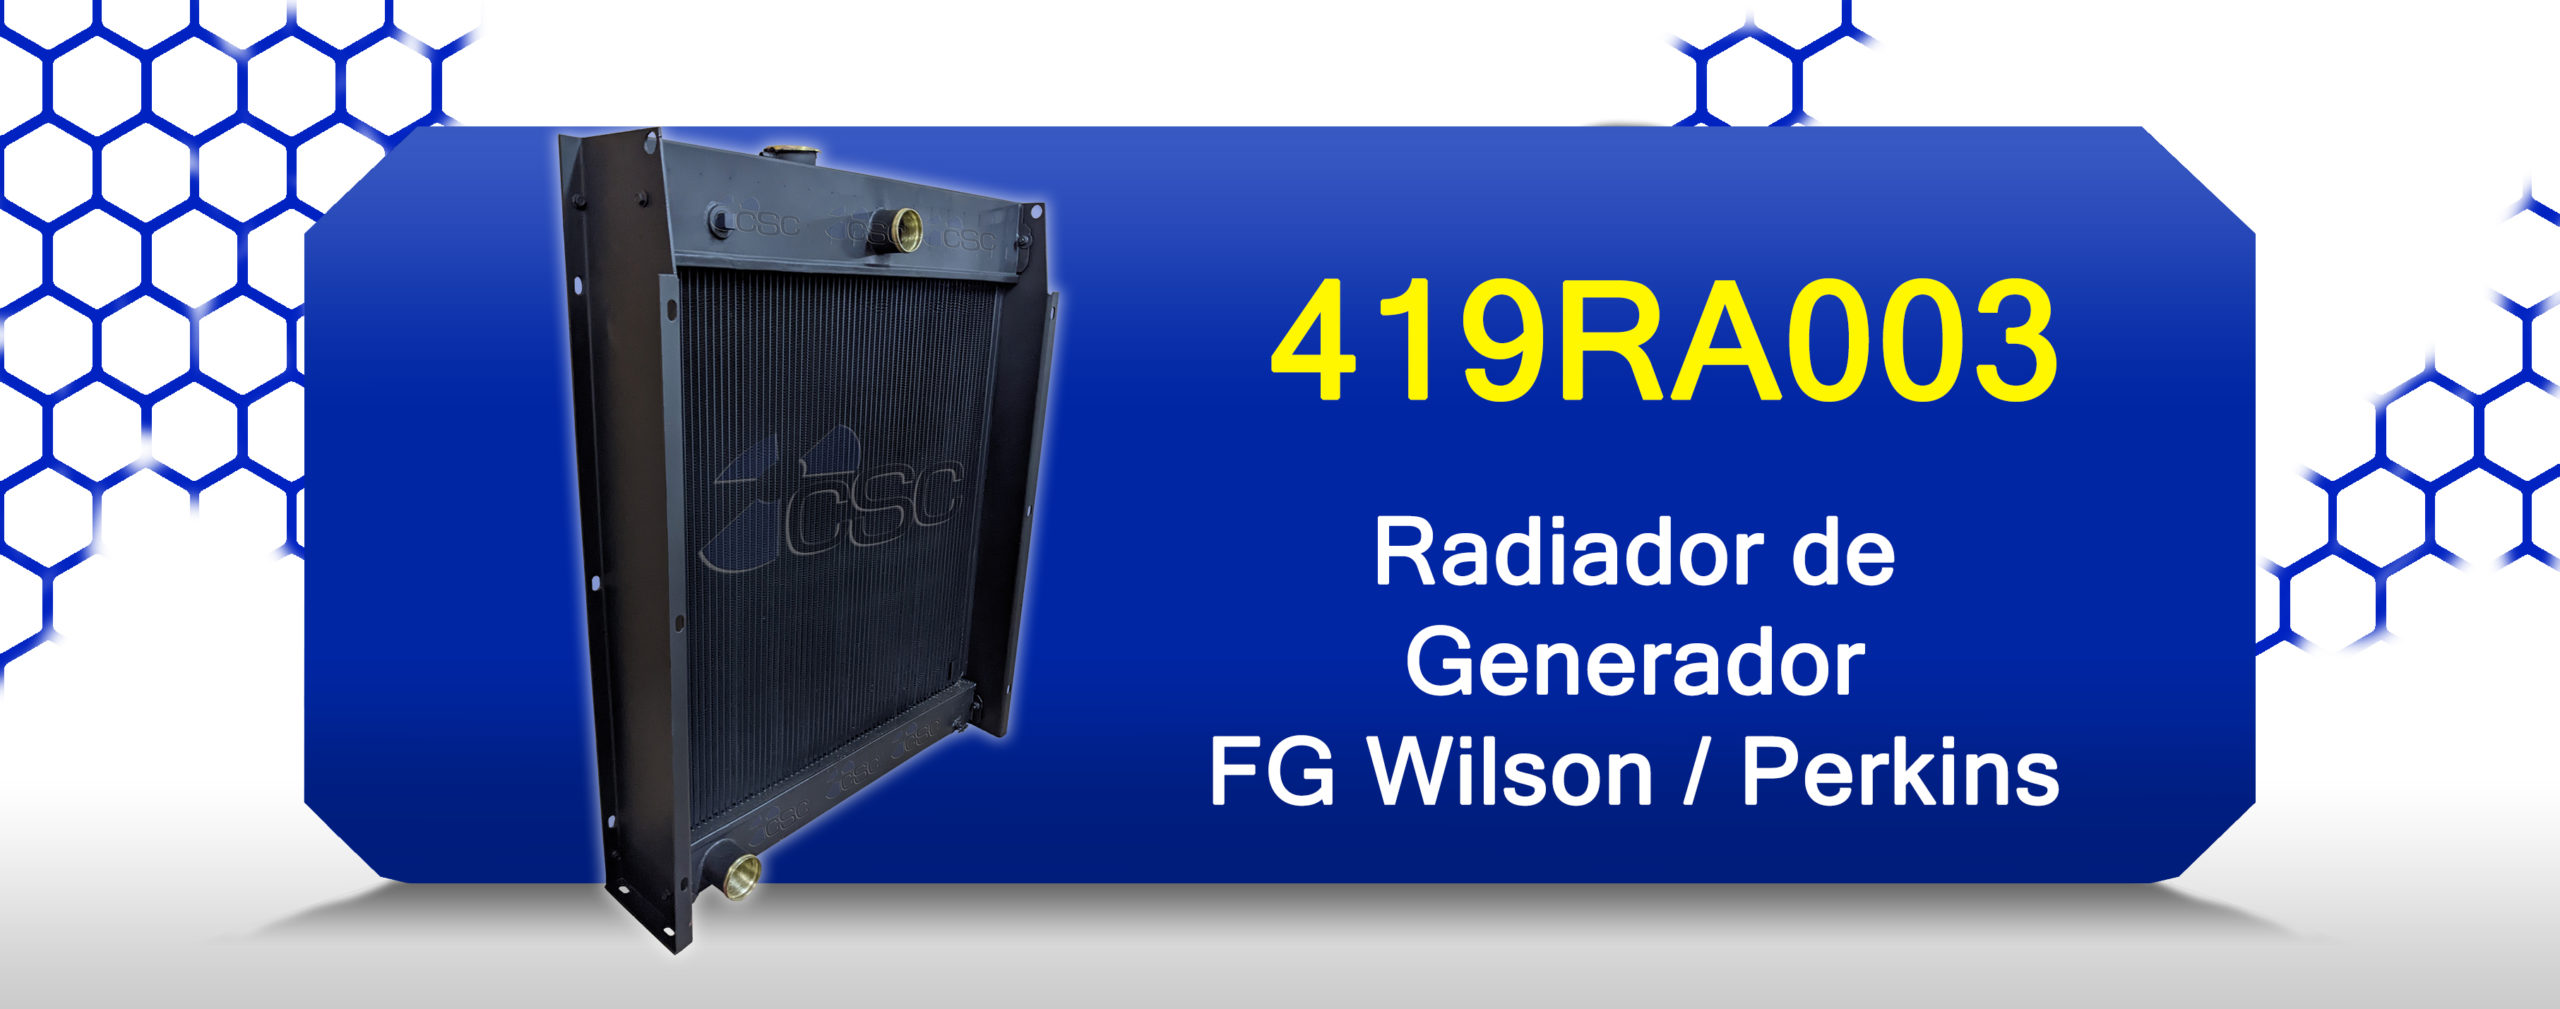 CSC presenta el radiador 419RA003 para generadores FG Wilson / Perkins